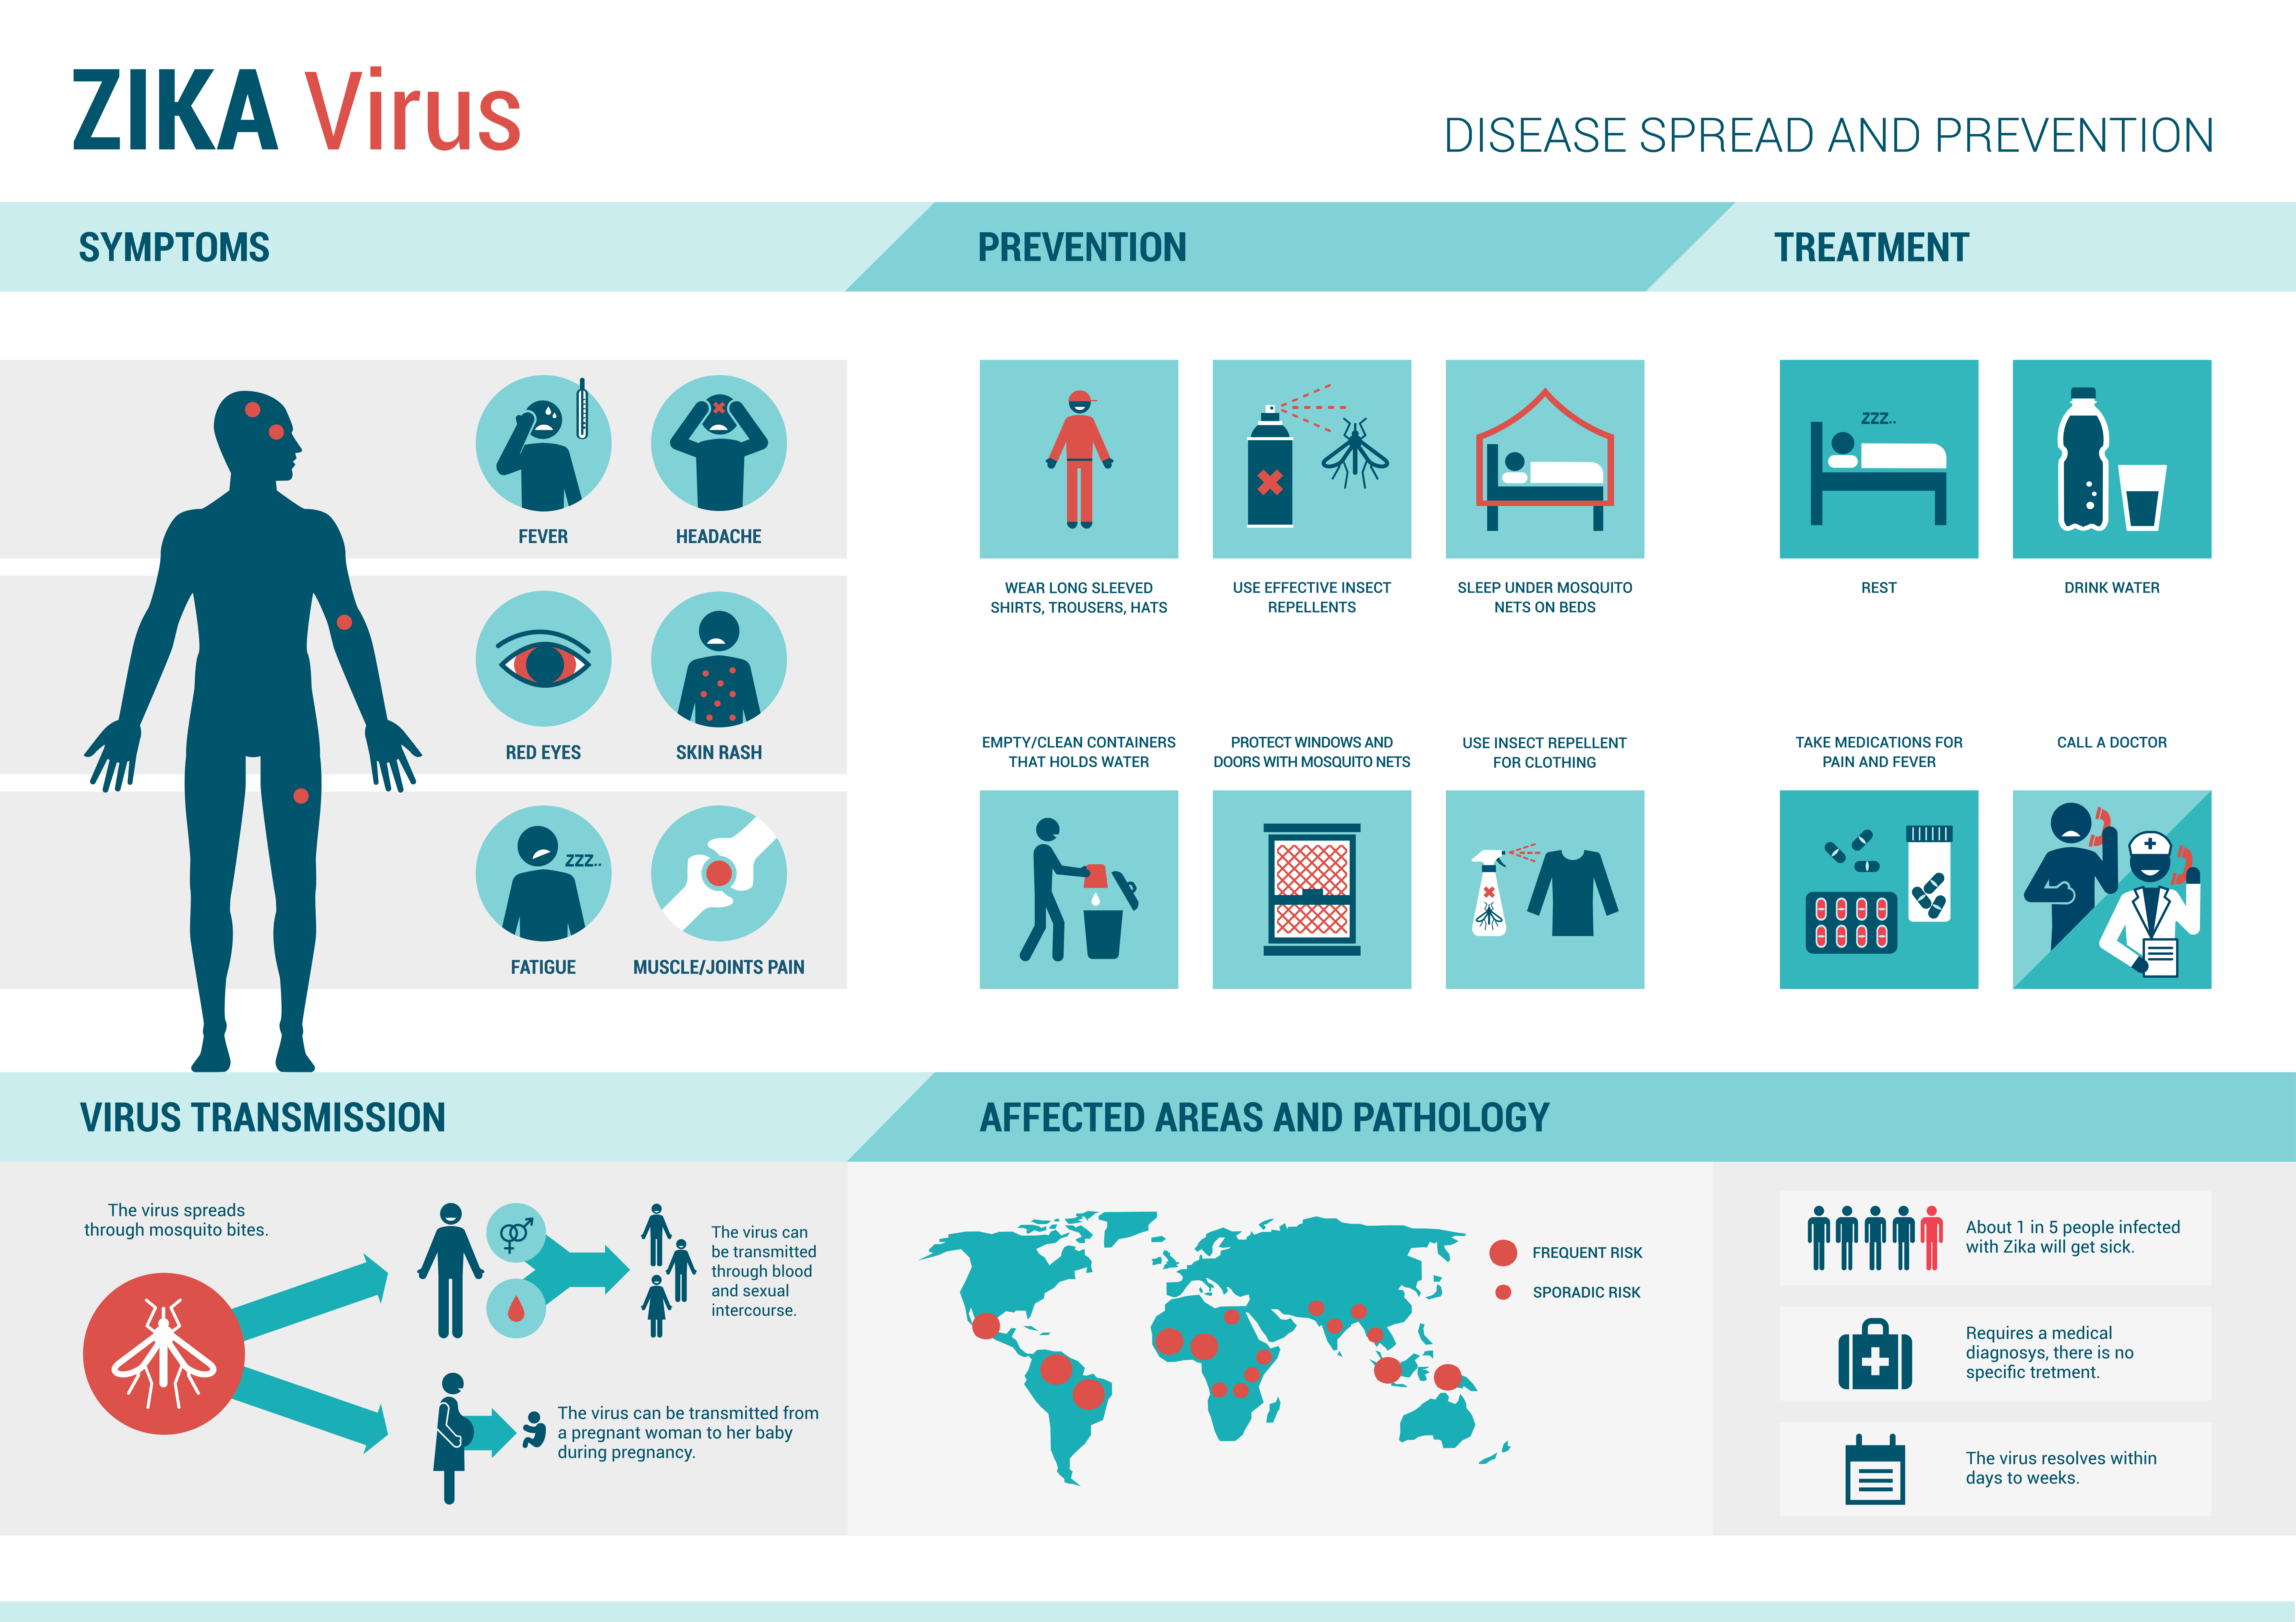 Zika Virus Symptoms & Prevention - Treatment @ MDIMC